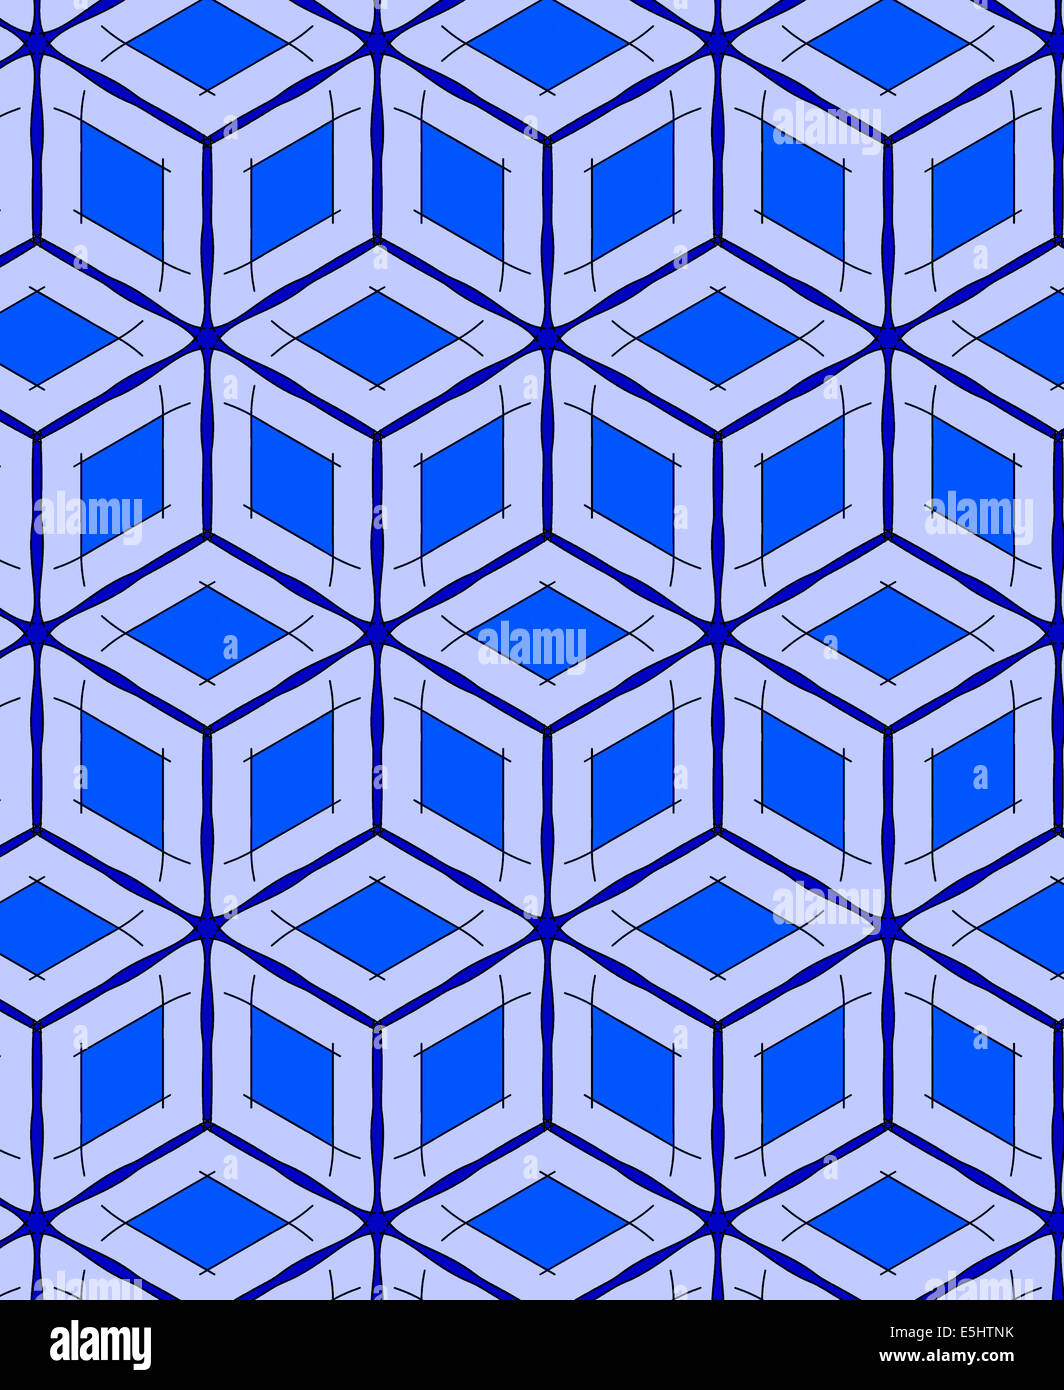 Illustration of symmetrical patterned wallpaper Stock Photo